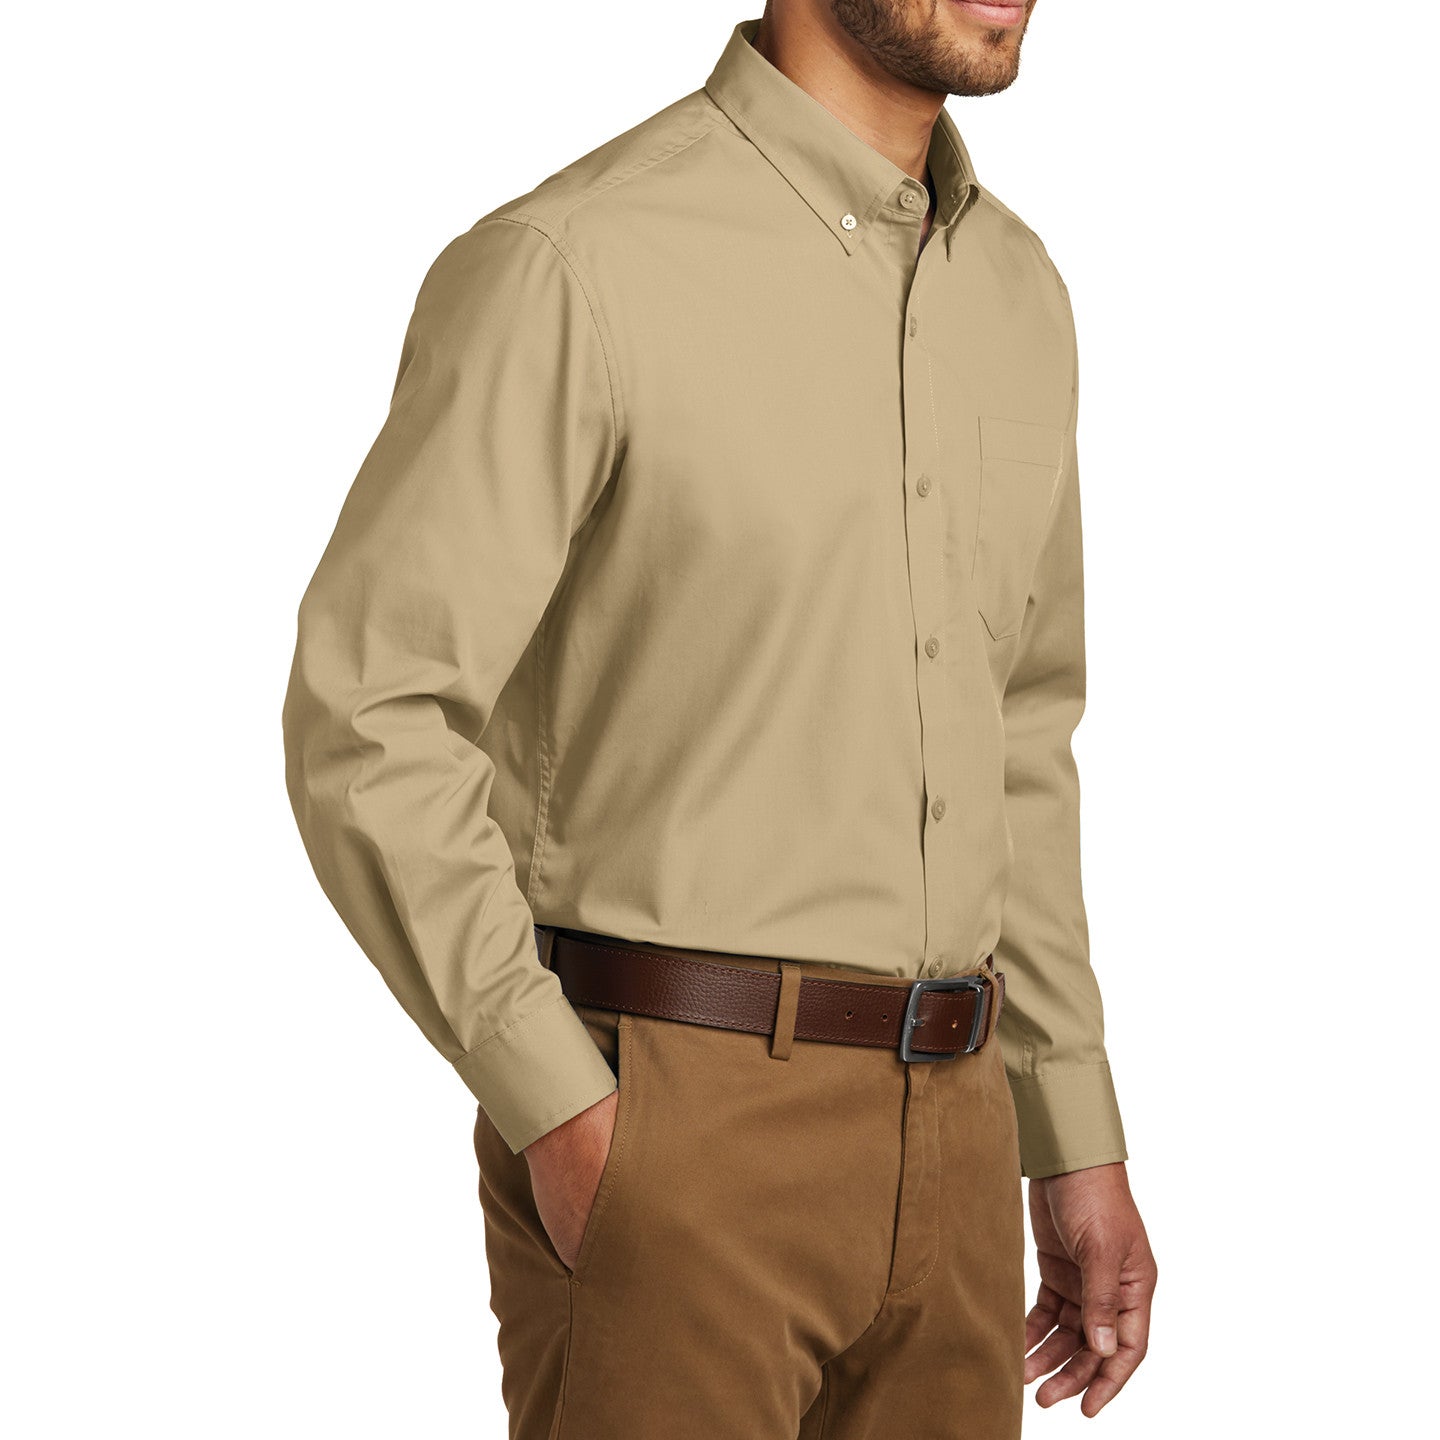 Men's Long Sleeve Carefree Poplin Shirt